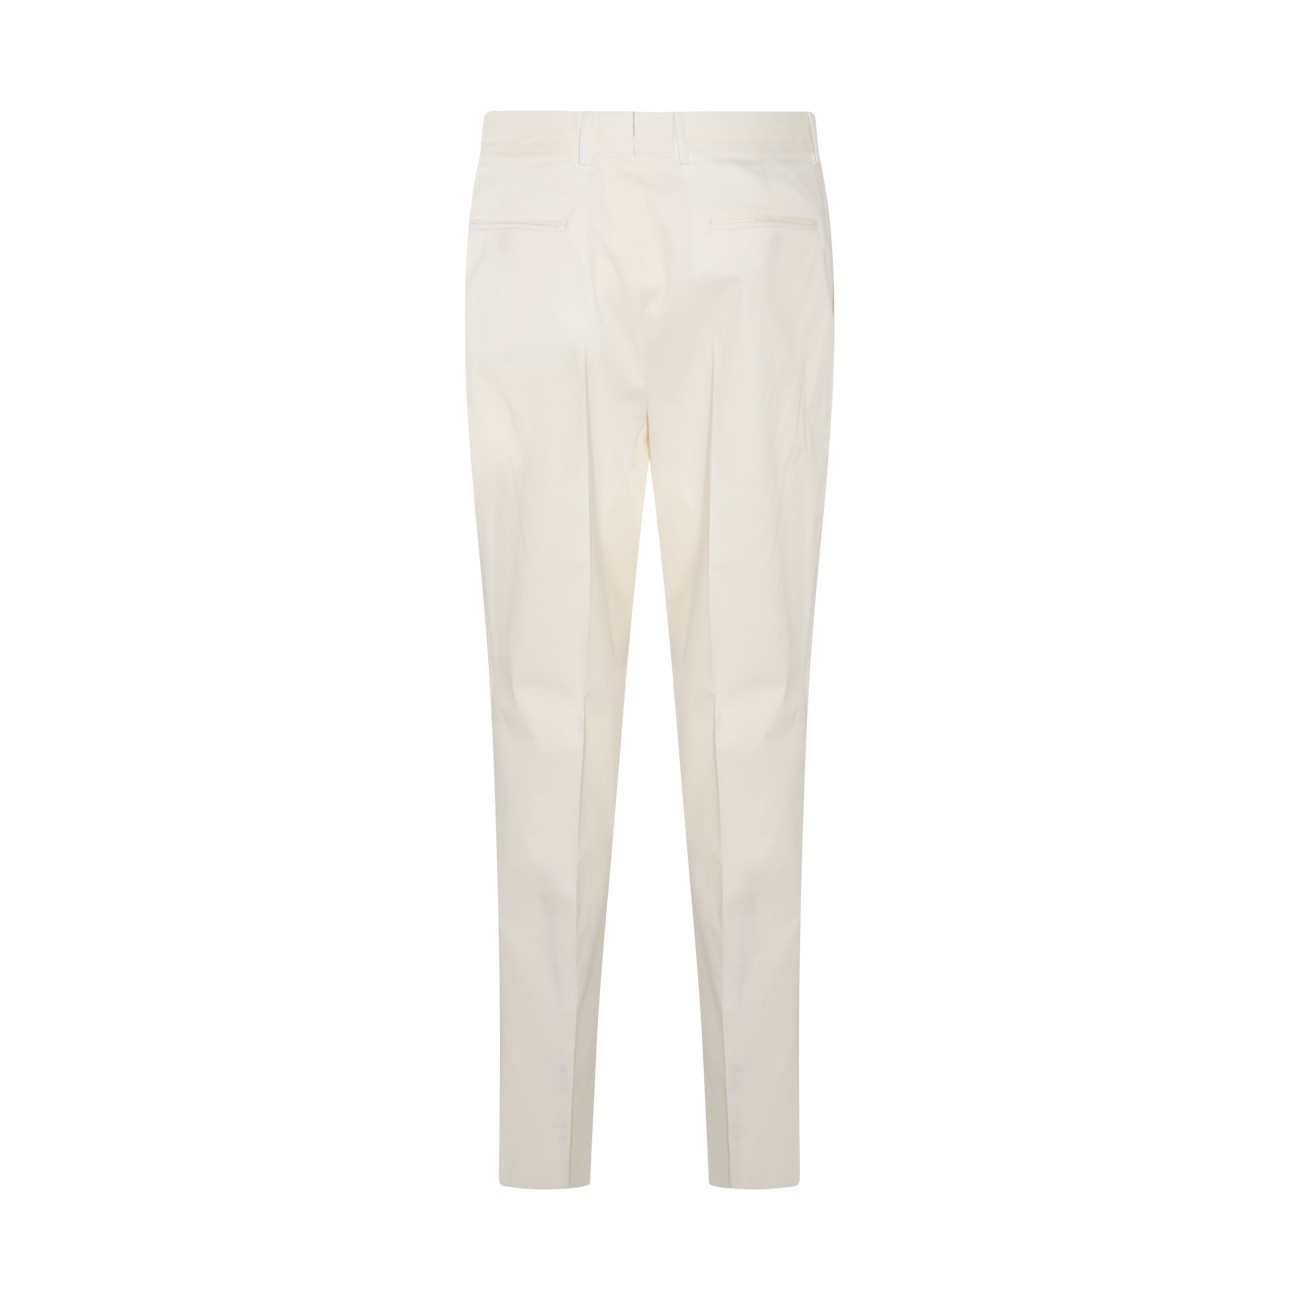 white cotton blend trousers - 2